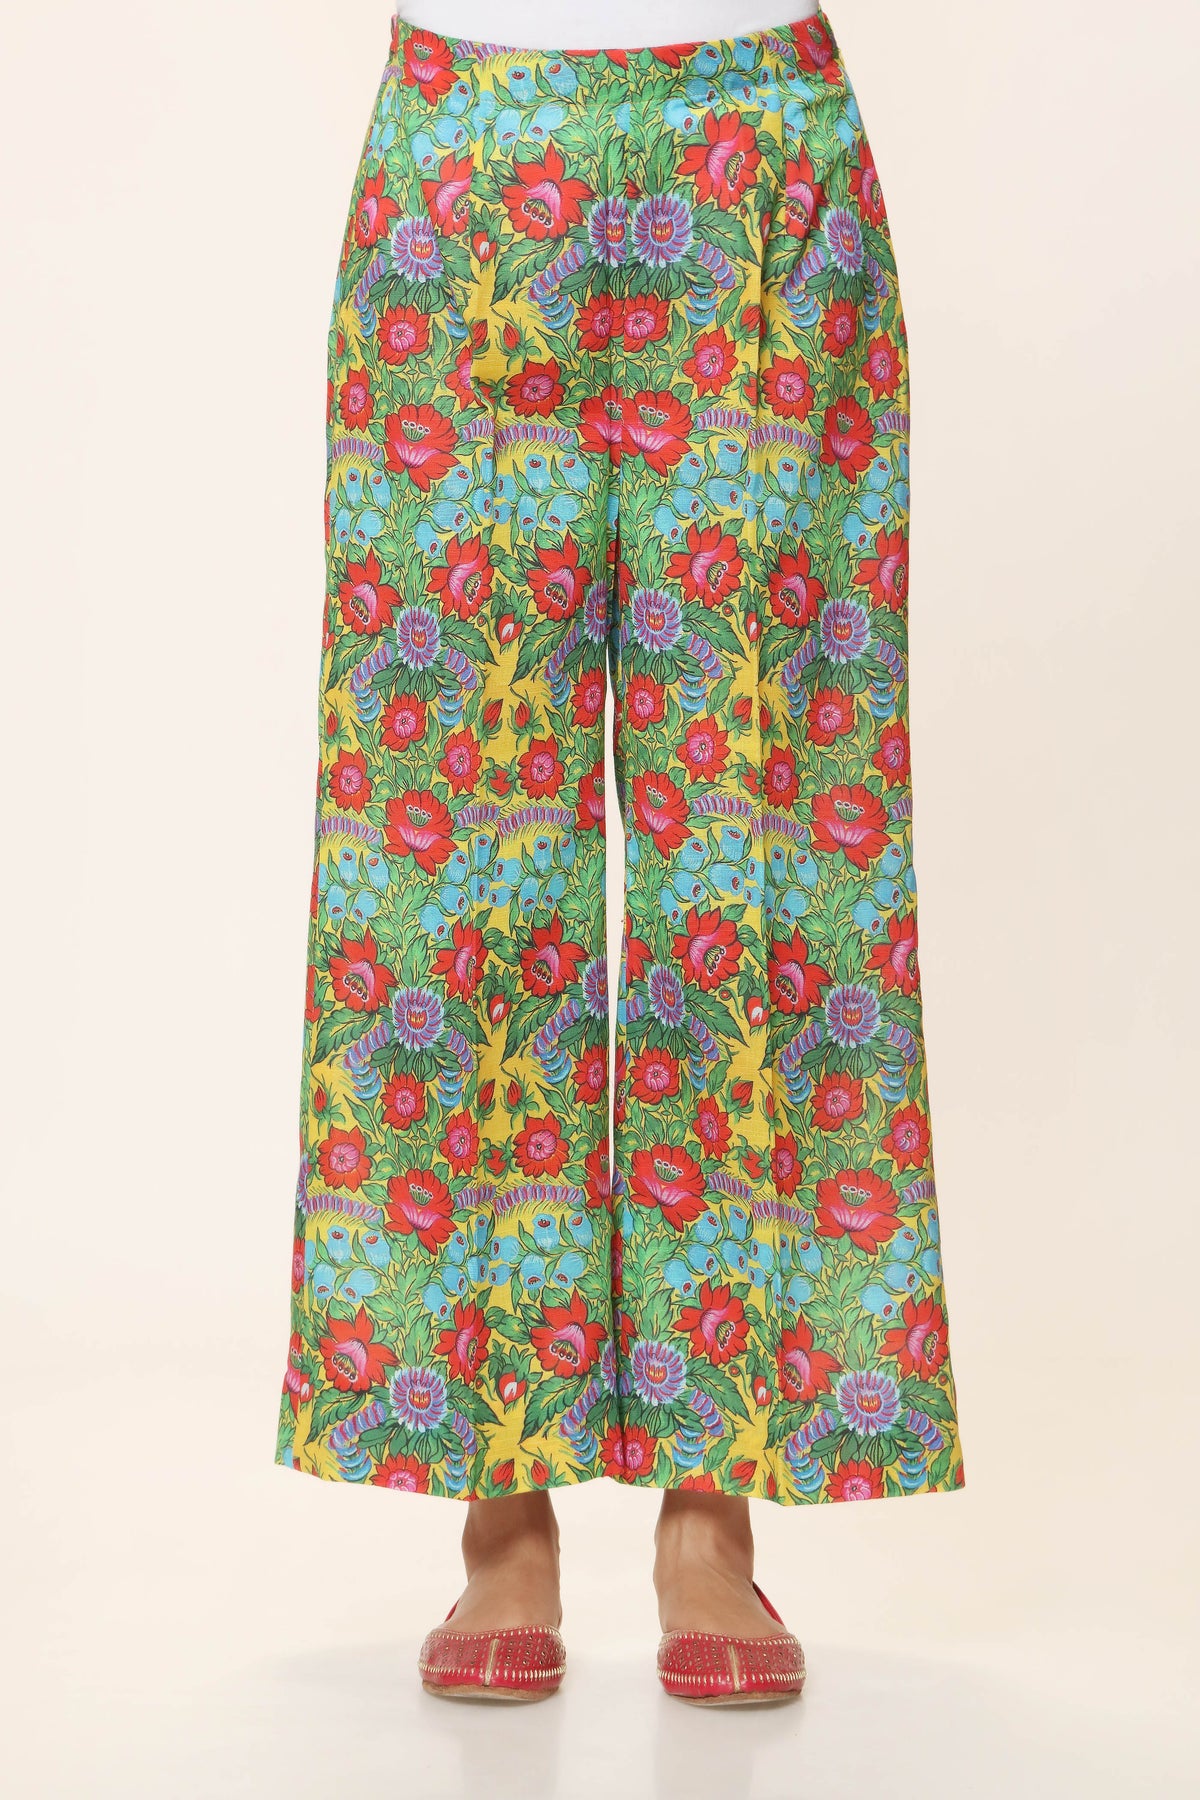 Chain Stitch Flower Coordinate in Multi coloured Slub Khaddar fabric